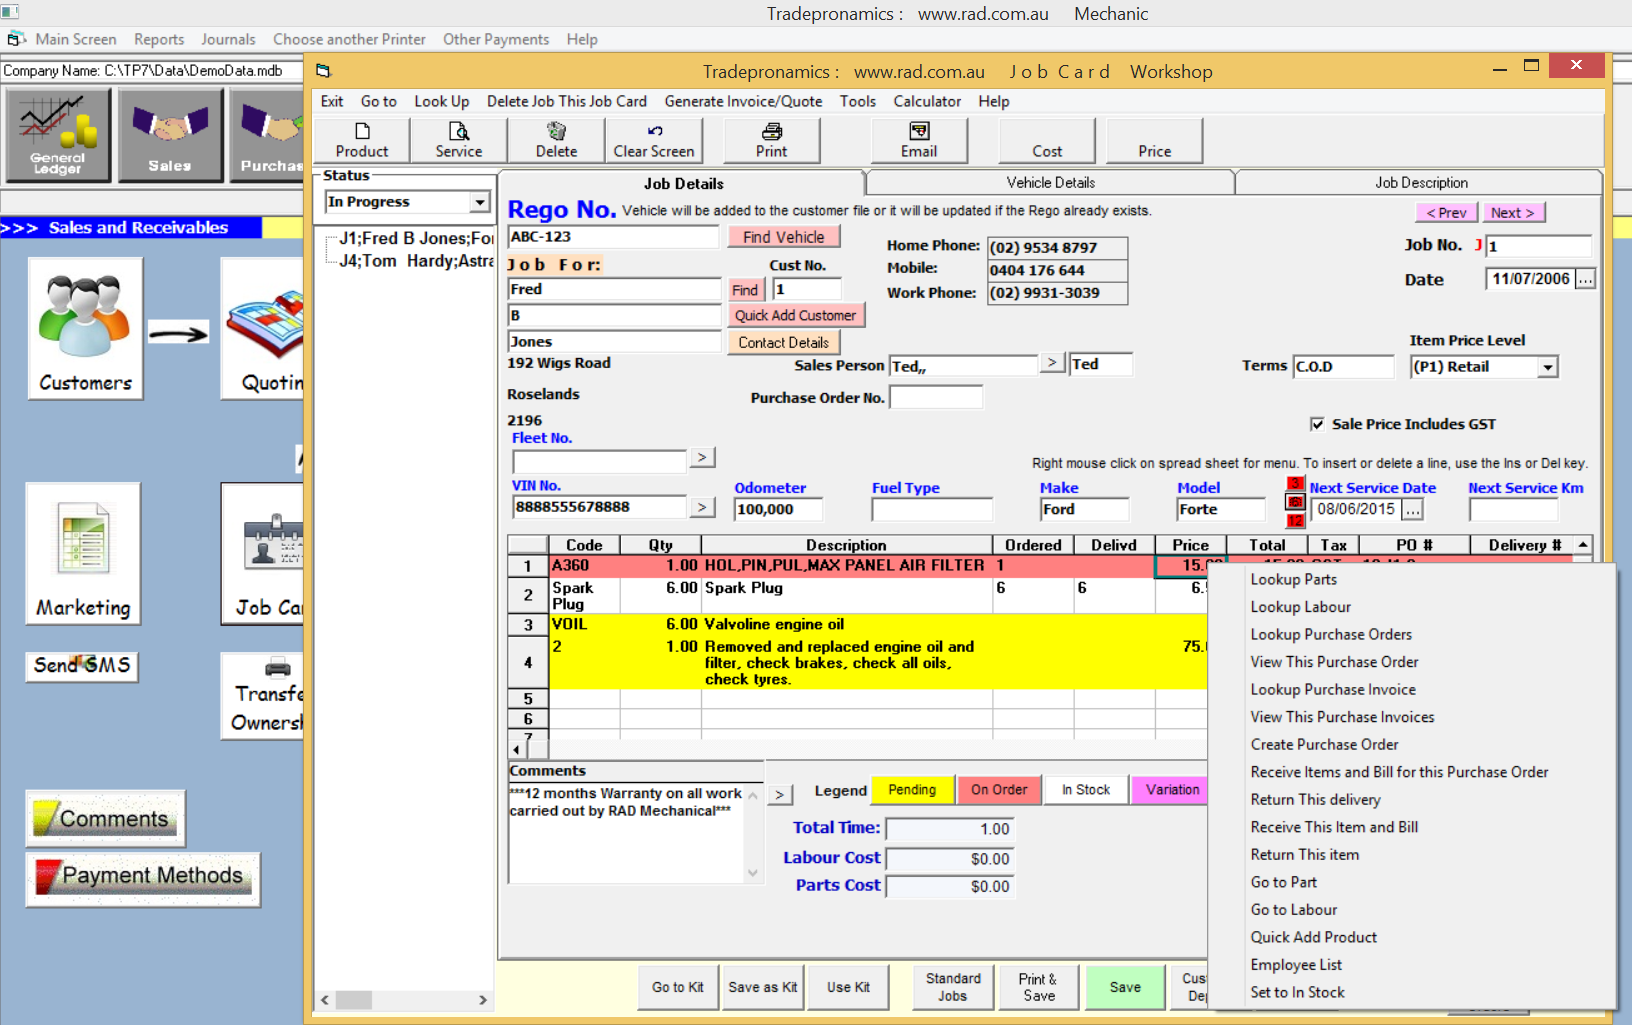 Auto Repair Invoice Software  Workshop Manager Software Regarding Mechanic Job Card Template